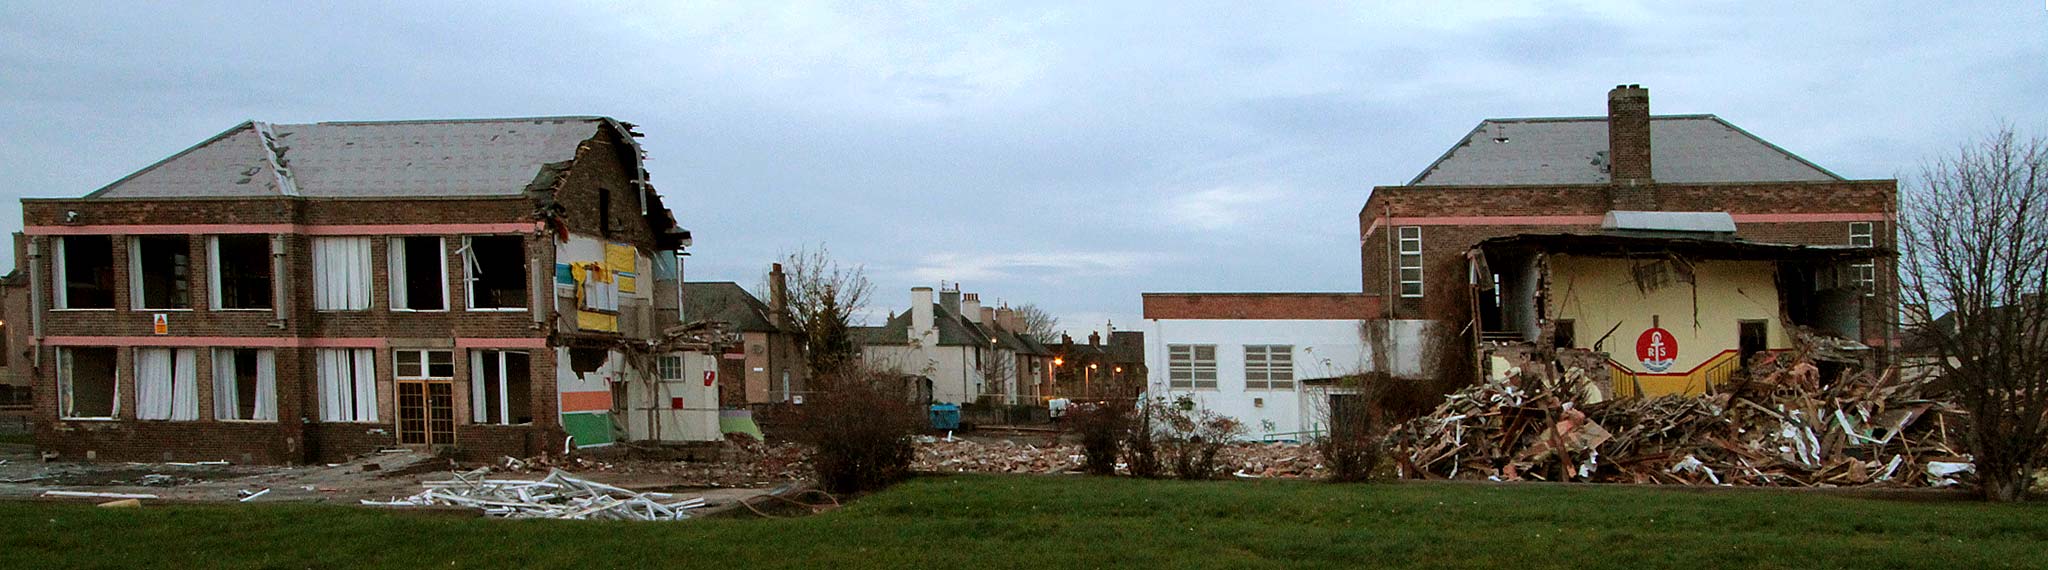 Demolition of Royston Primary School, Boswall Parkway - November 2010